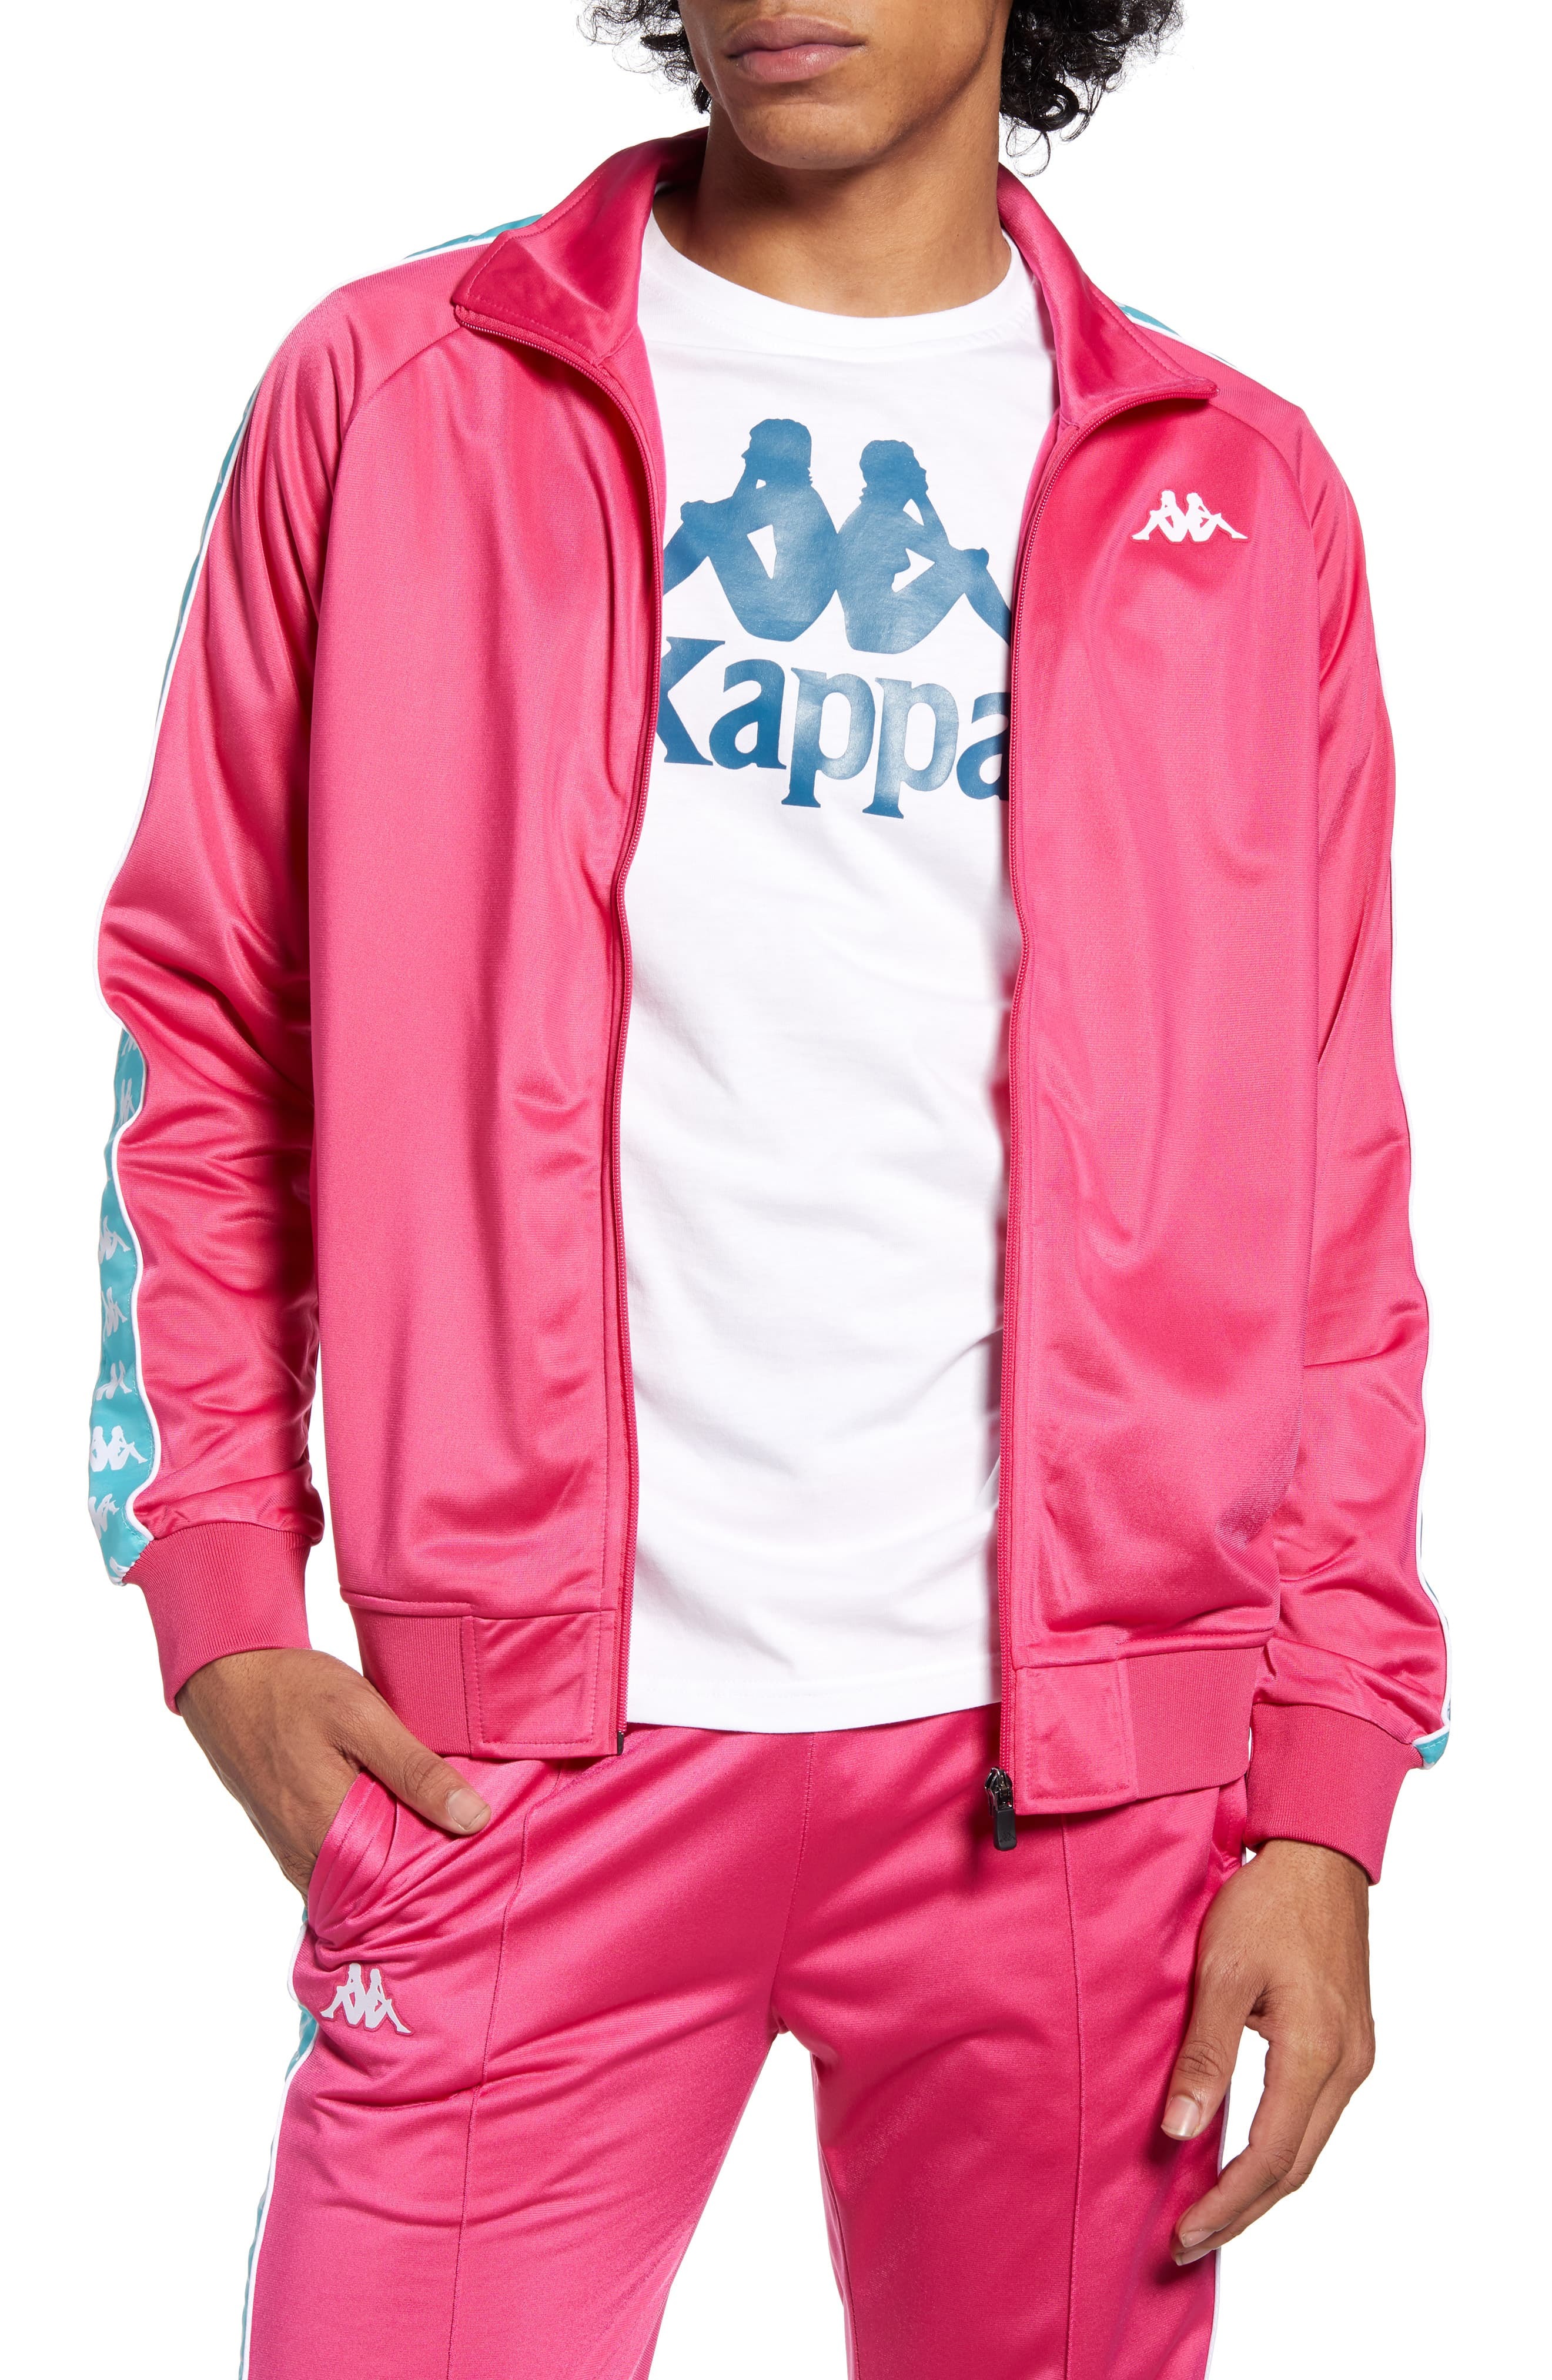 kappa mens track jacket